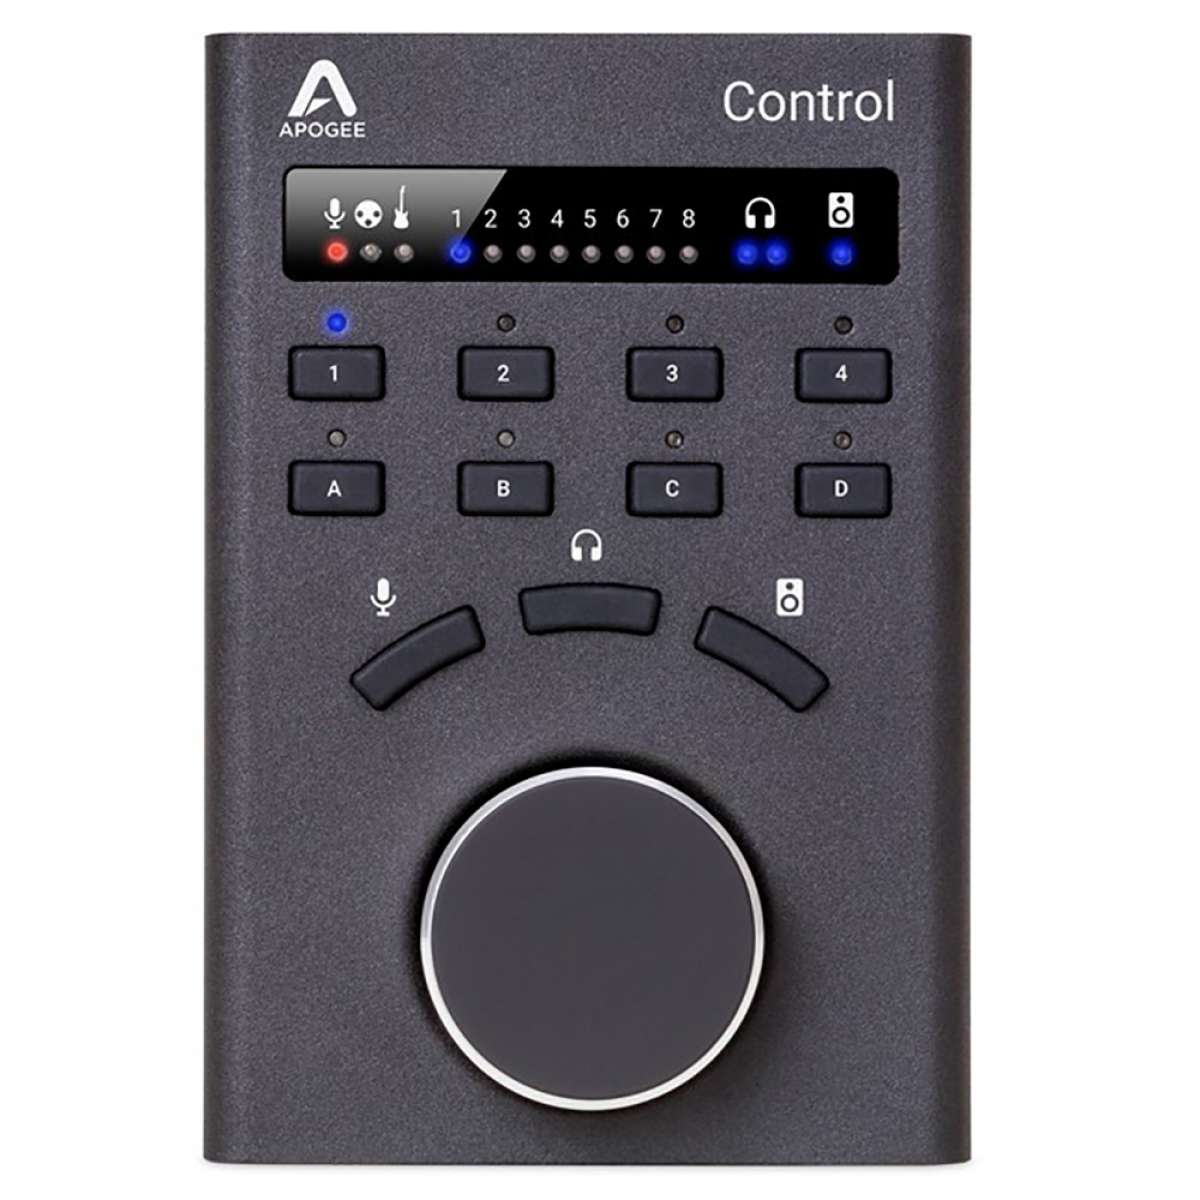 Apogee Element Control Hardware Remote